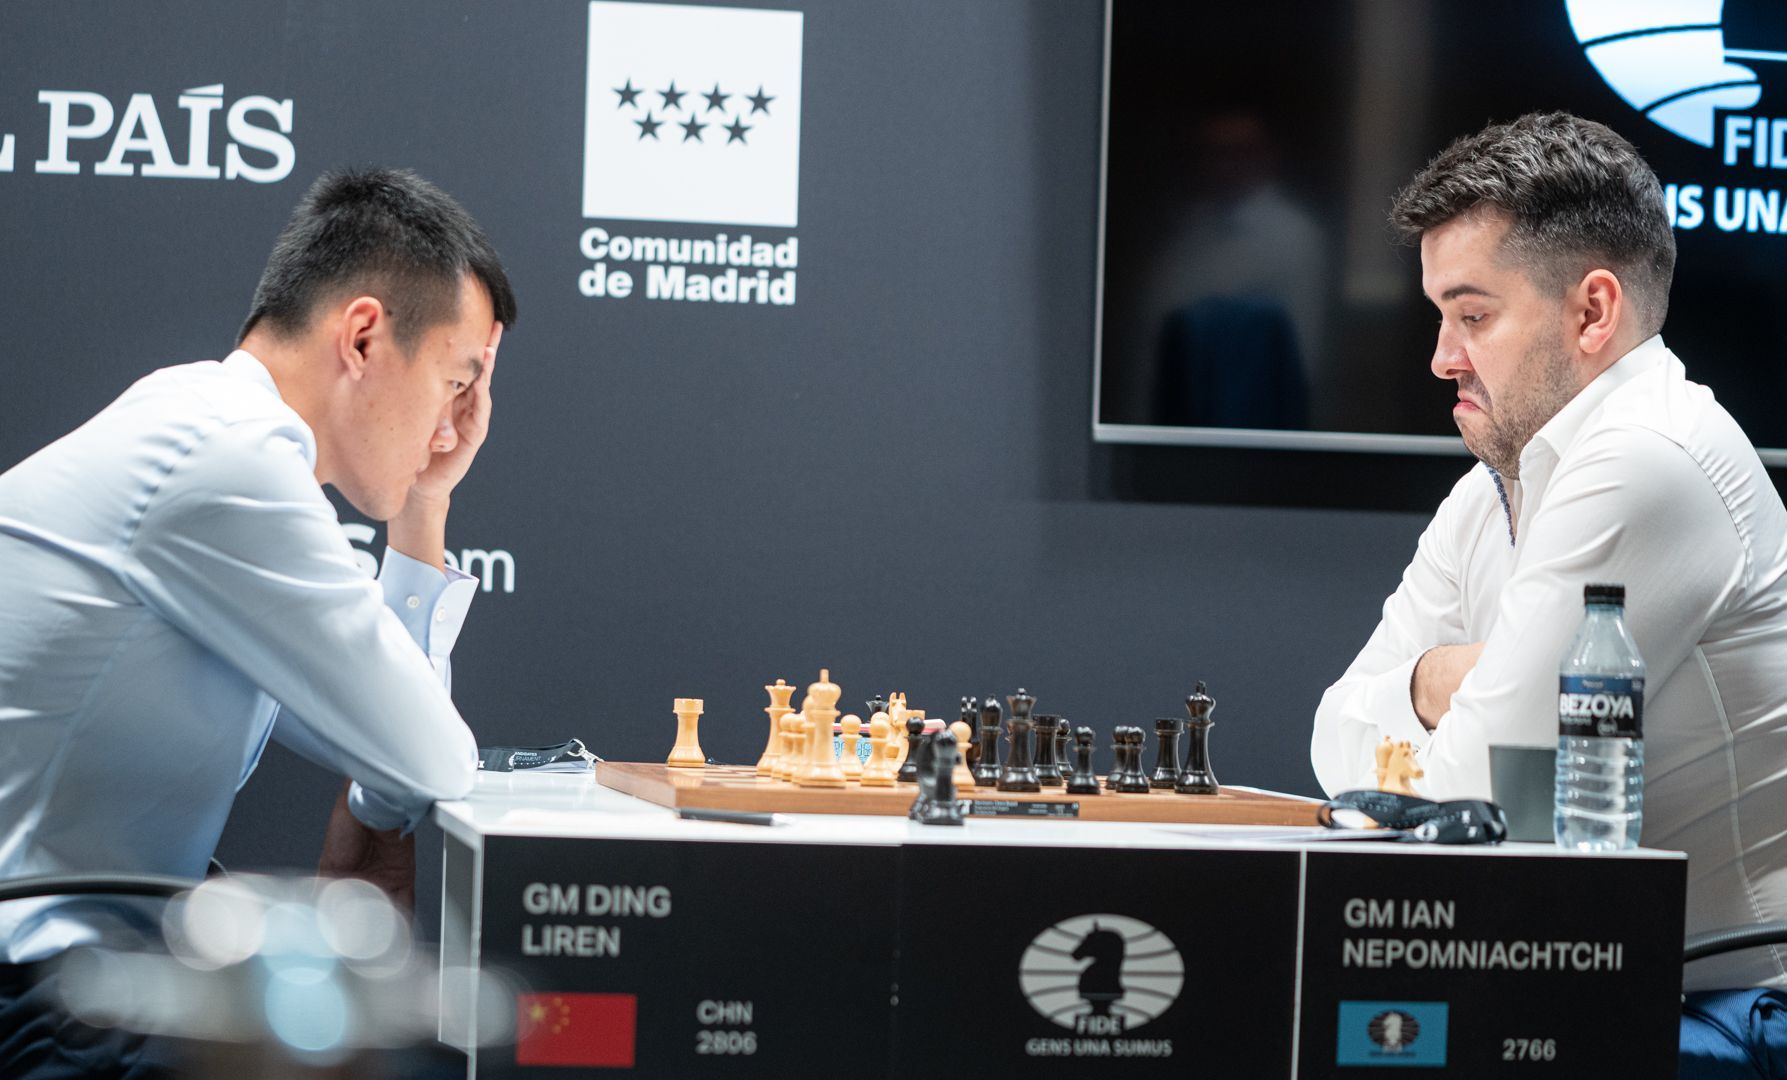 Who will win the 2023 World Chess Championship? - Quora